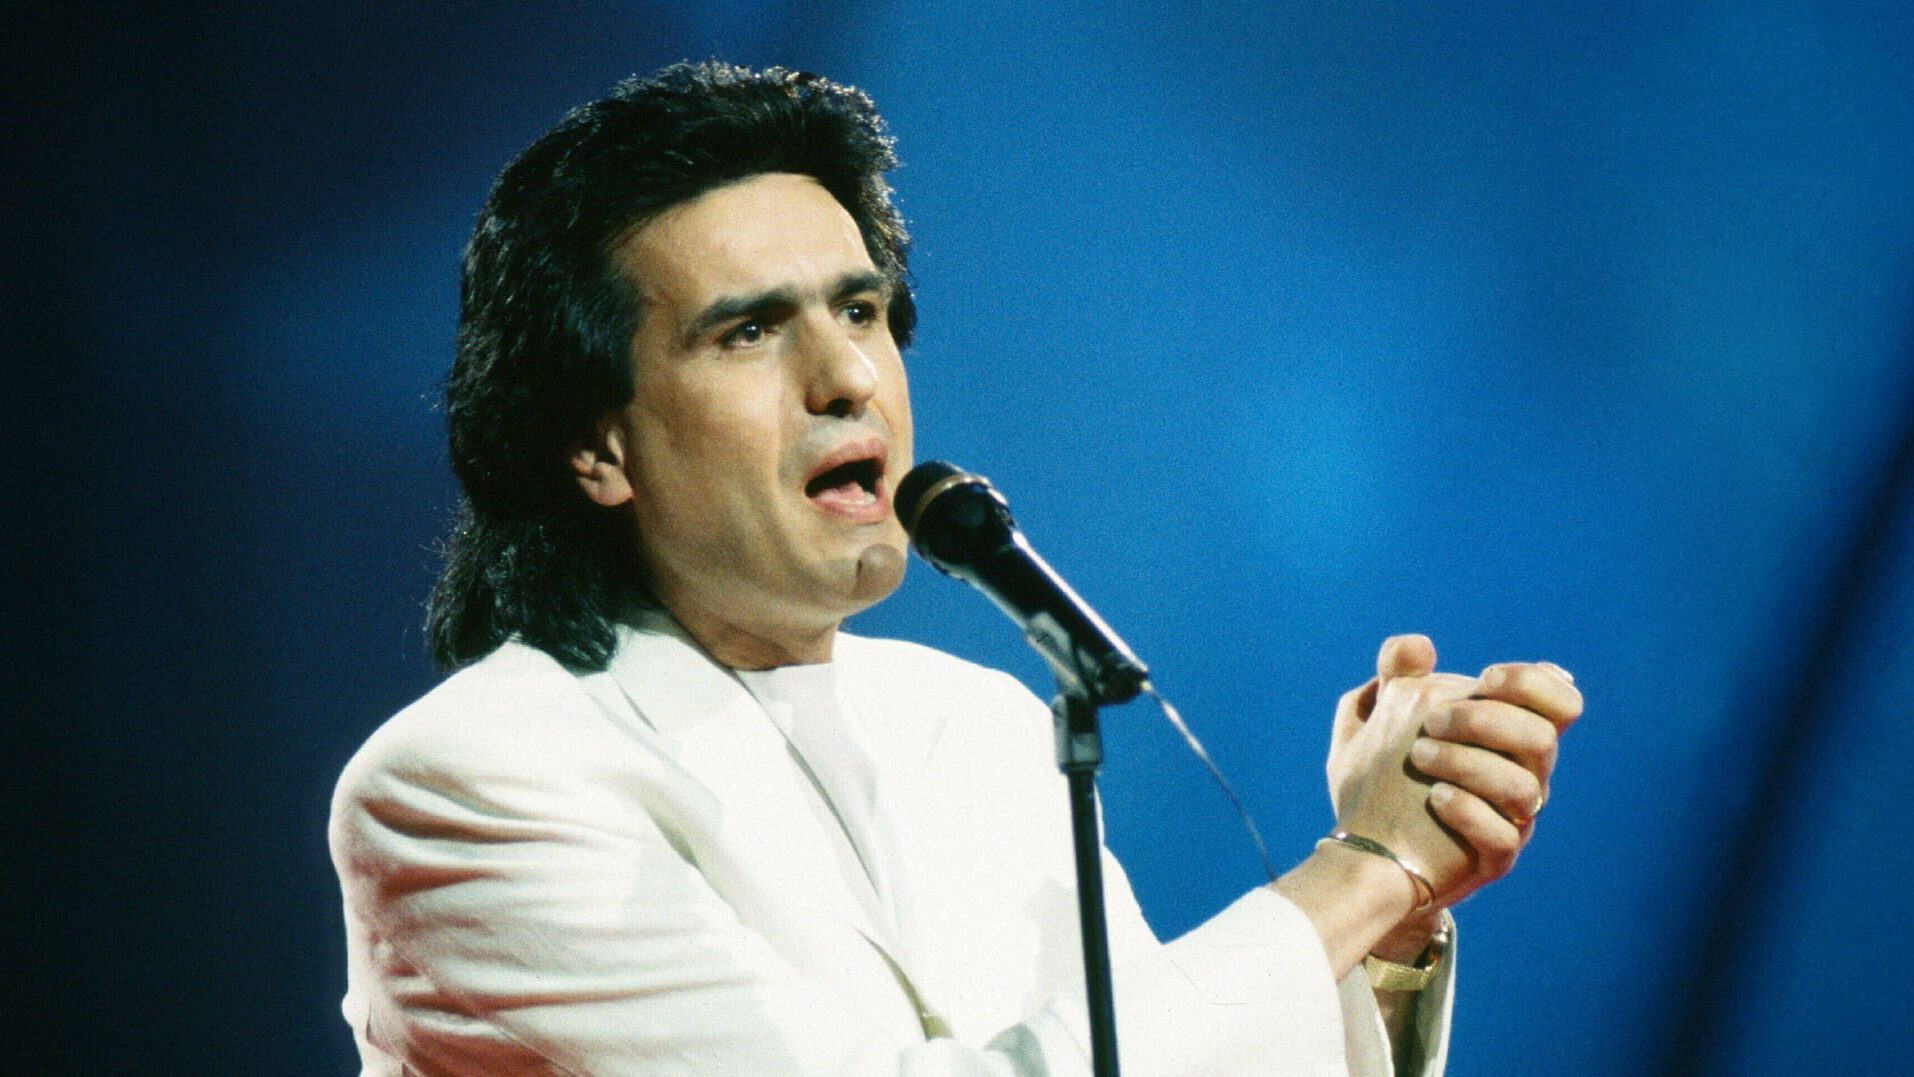 Toto Cutugno, Italian winner of the Eurovision Song Contest 1990 ...